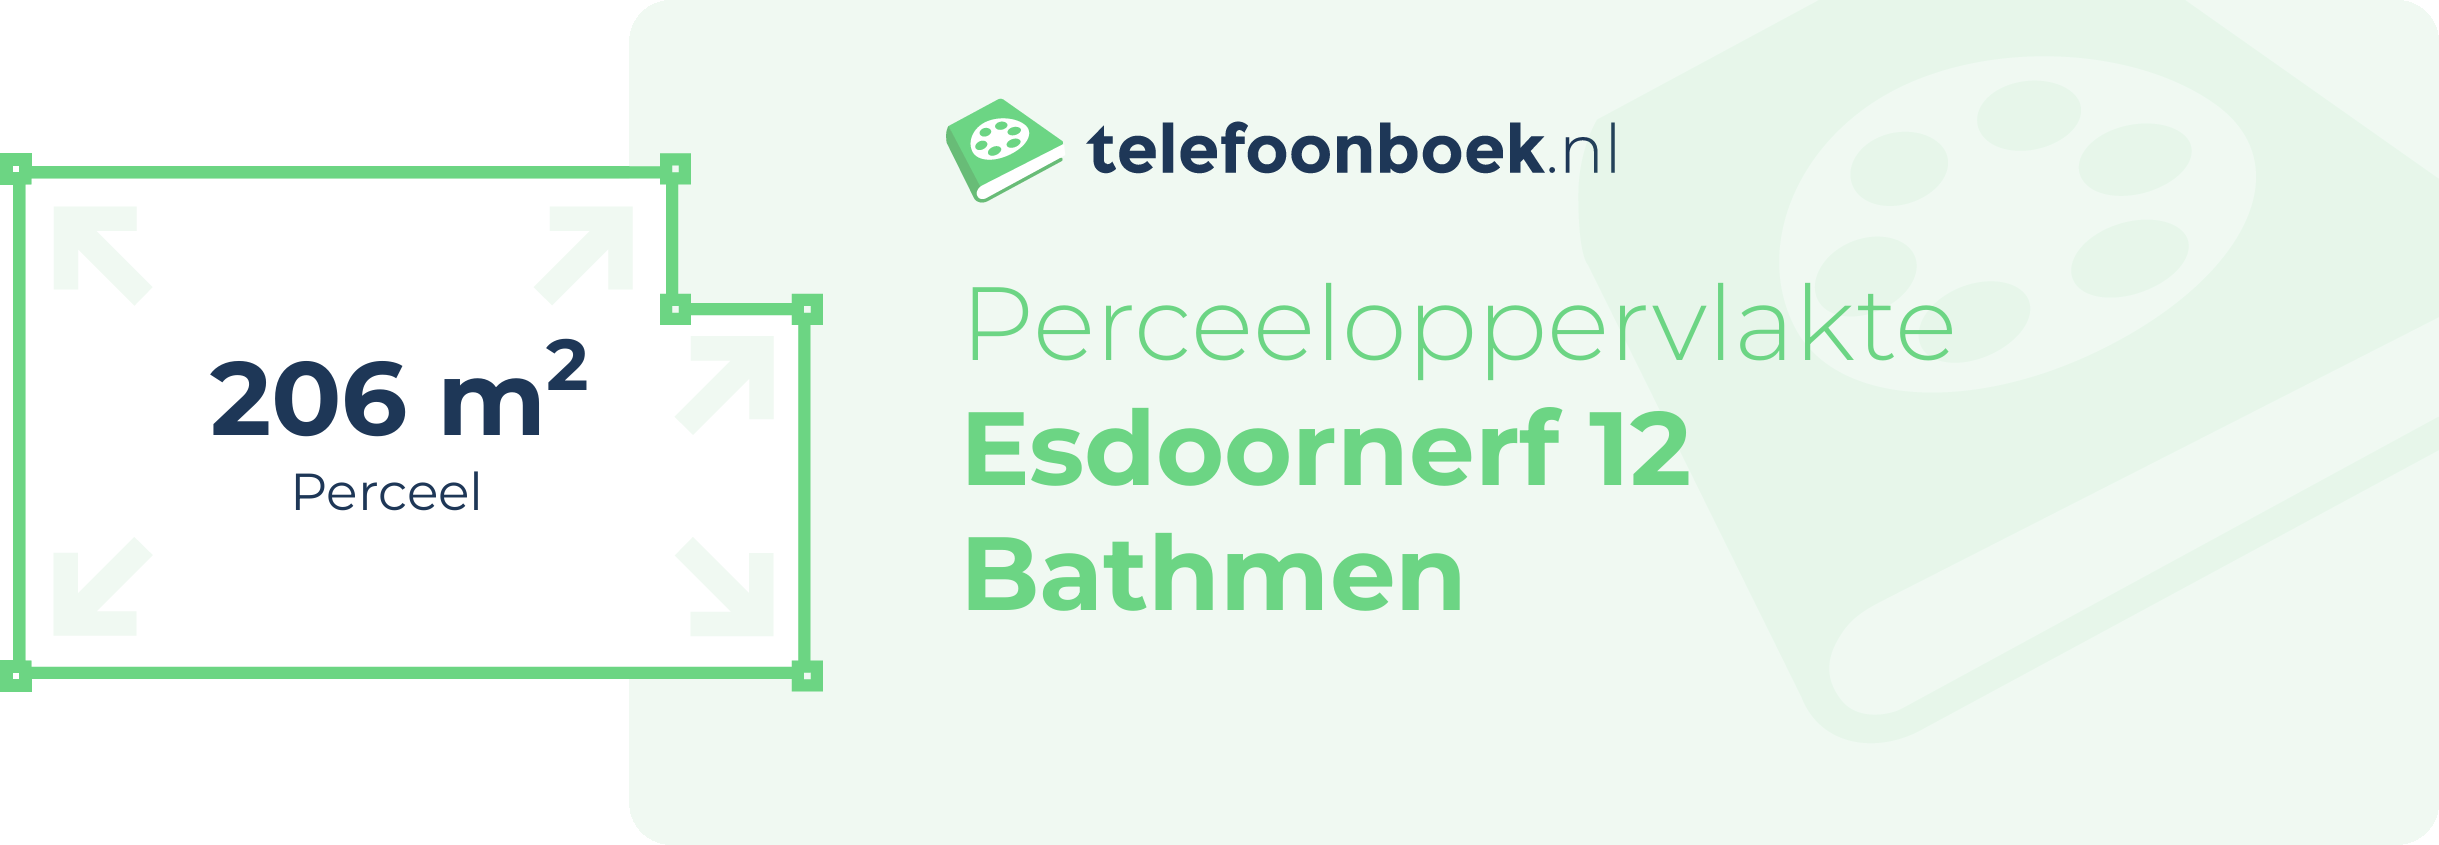 Perceeloppervlakte Esdoornerf 12 Bathmen